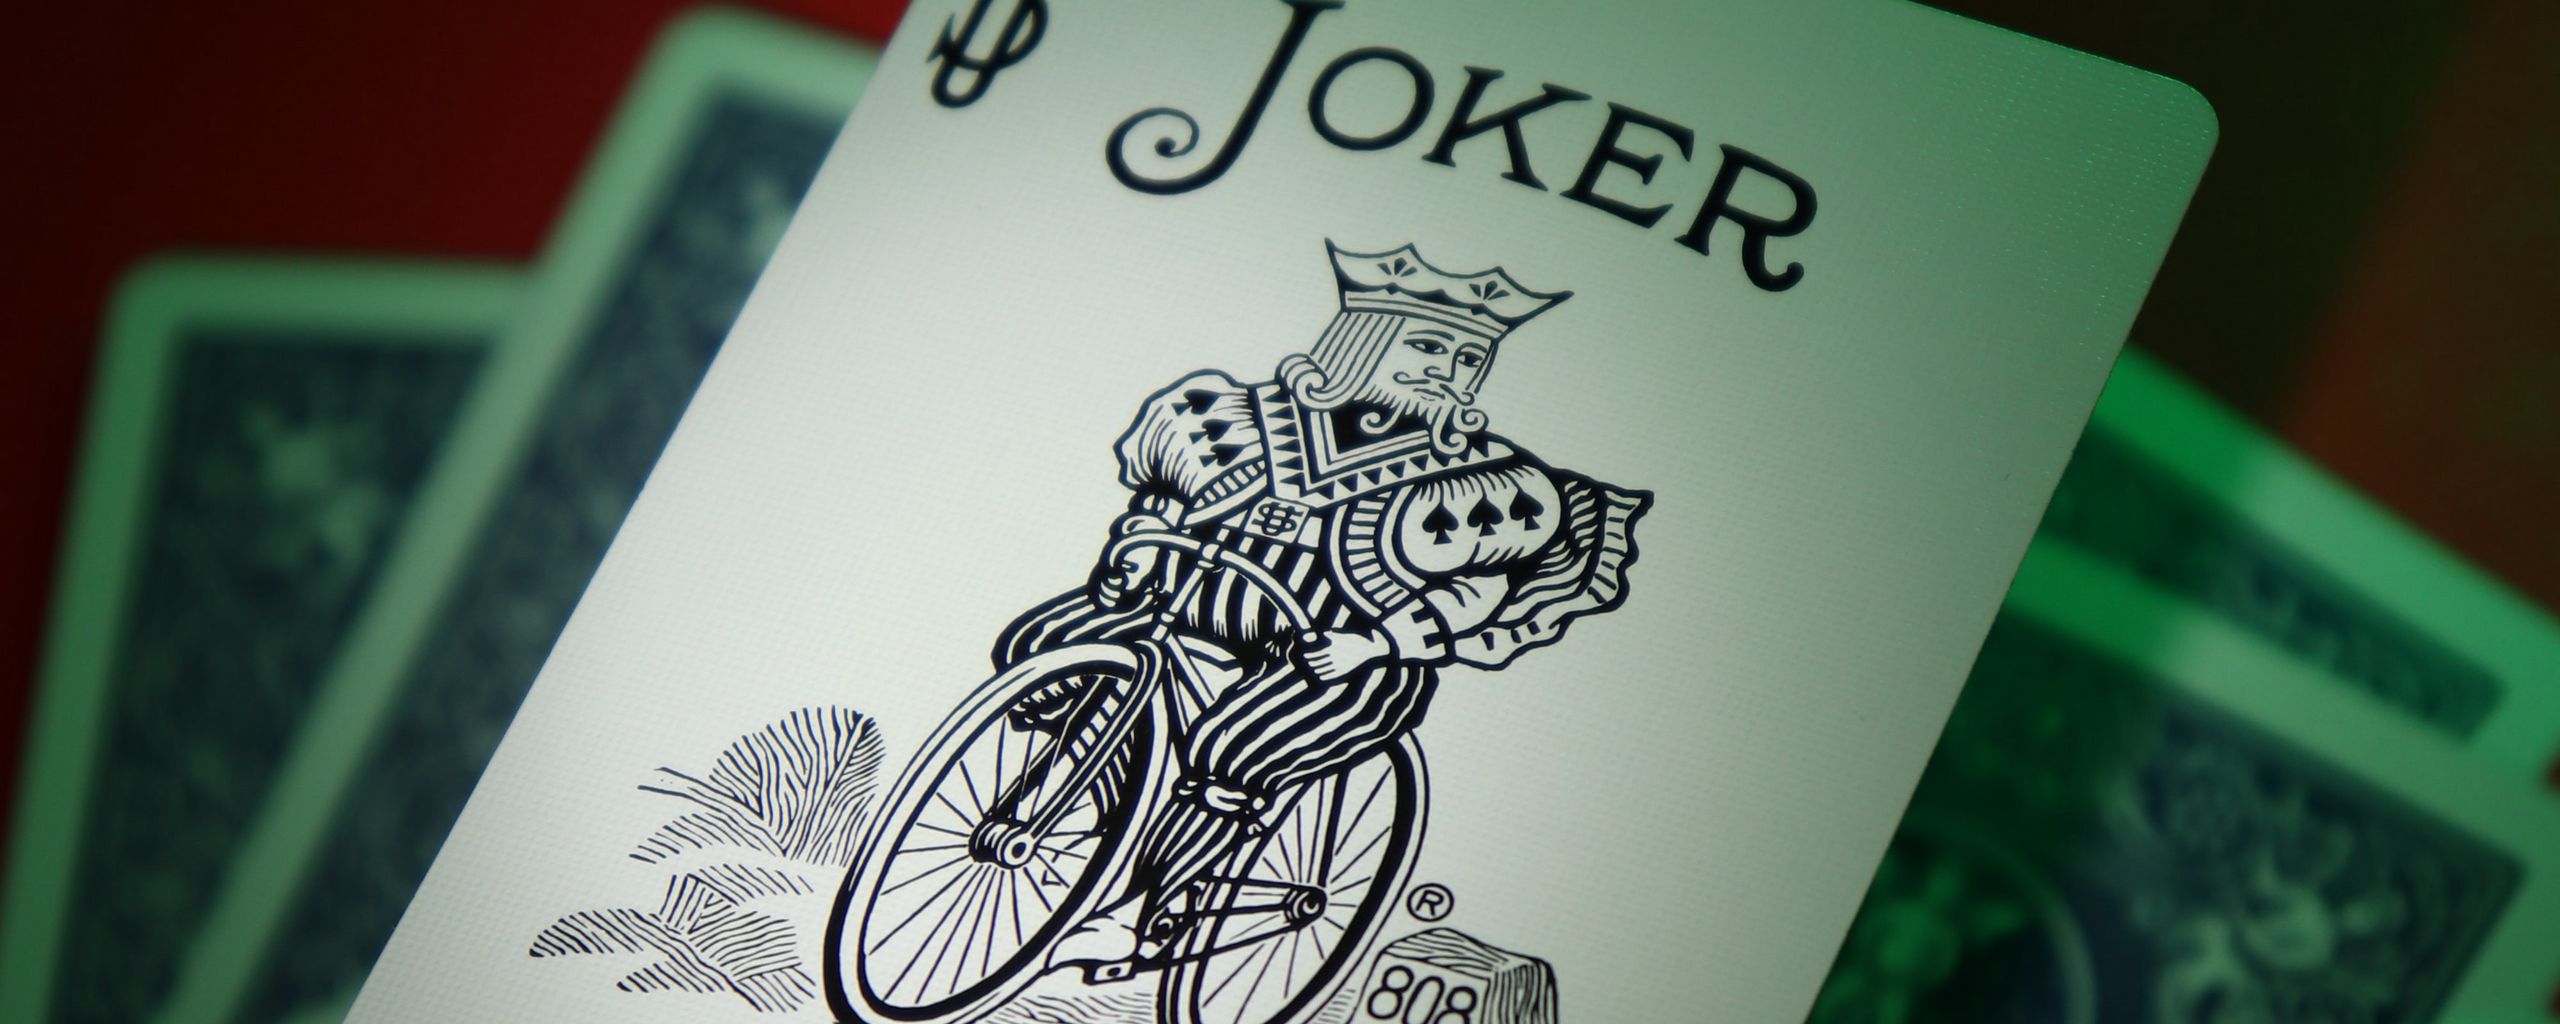 2560x1024 Wallpaper joker, word, inscription, cards